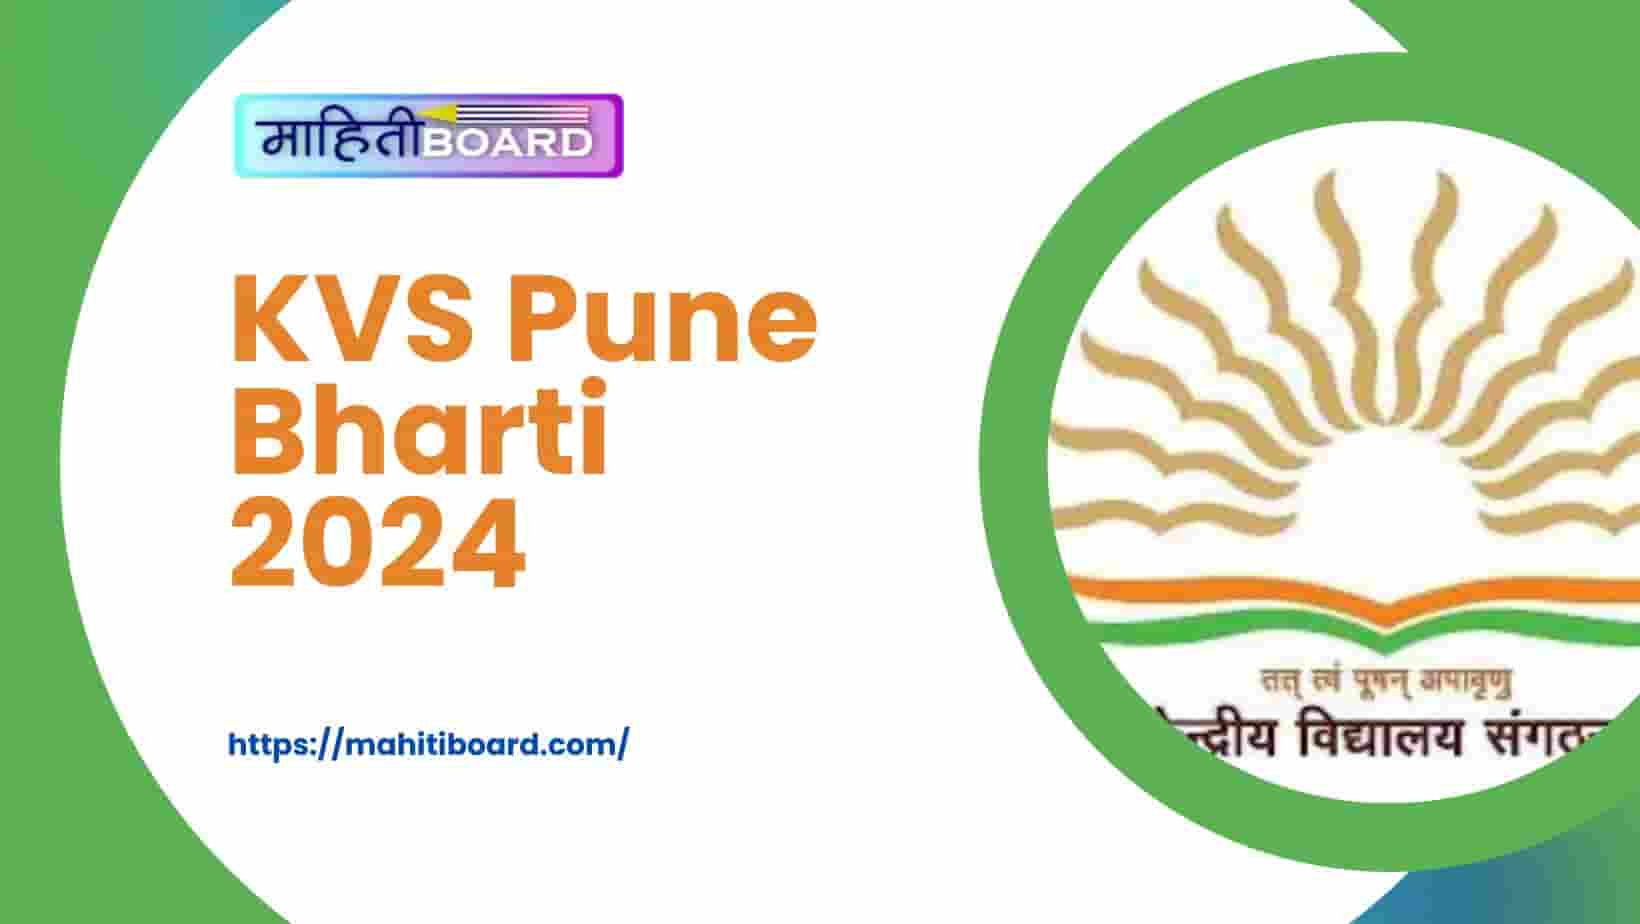 KVS Pune Bharti 2024